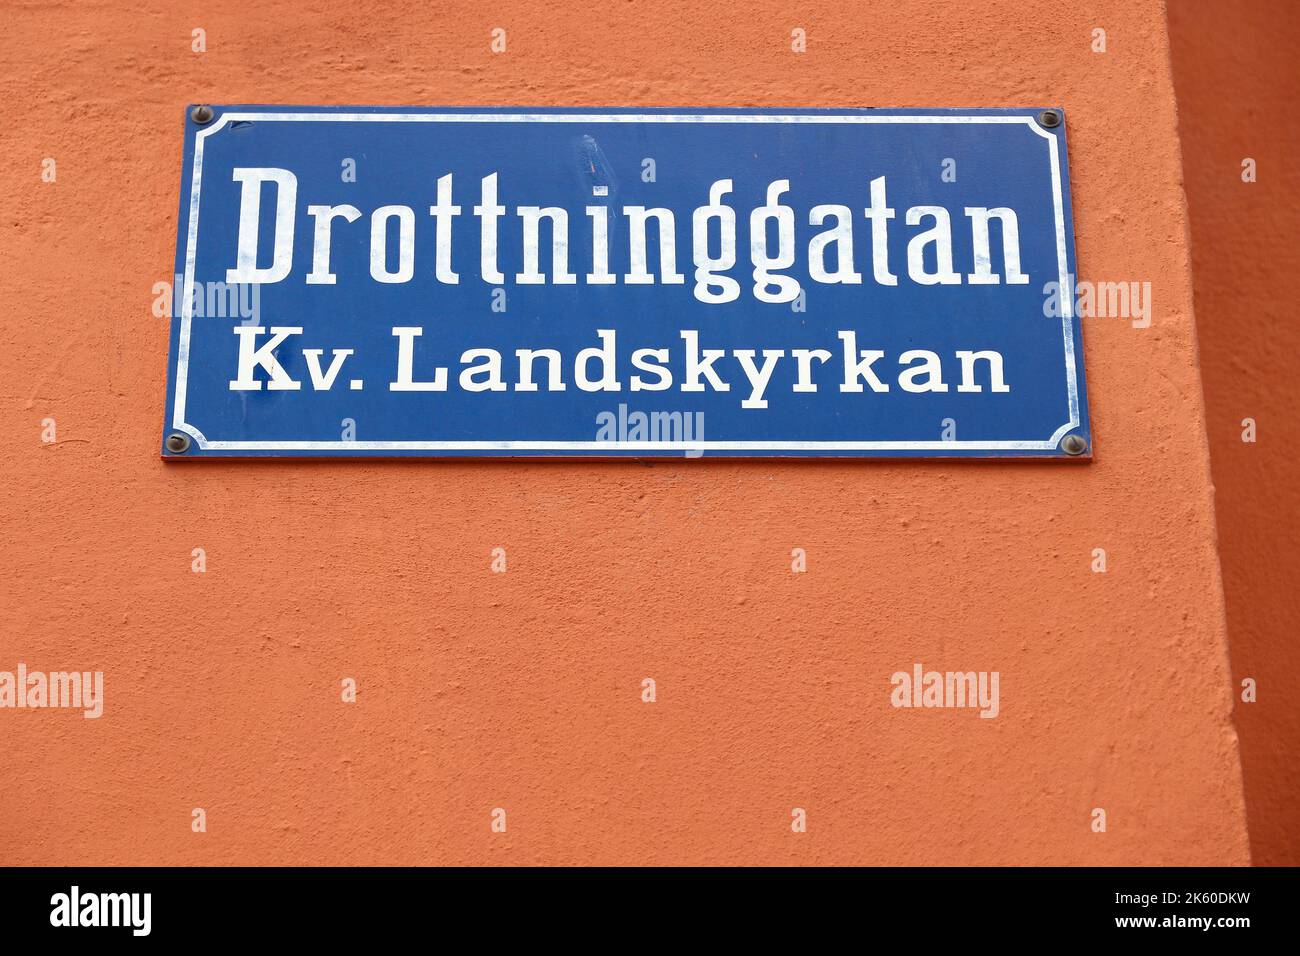 Norrkoping town in Sweden. Drottninggatan street name sign. Stock Photo